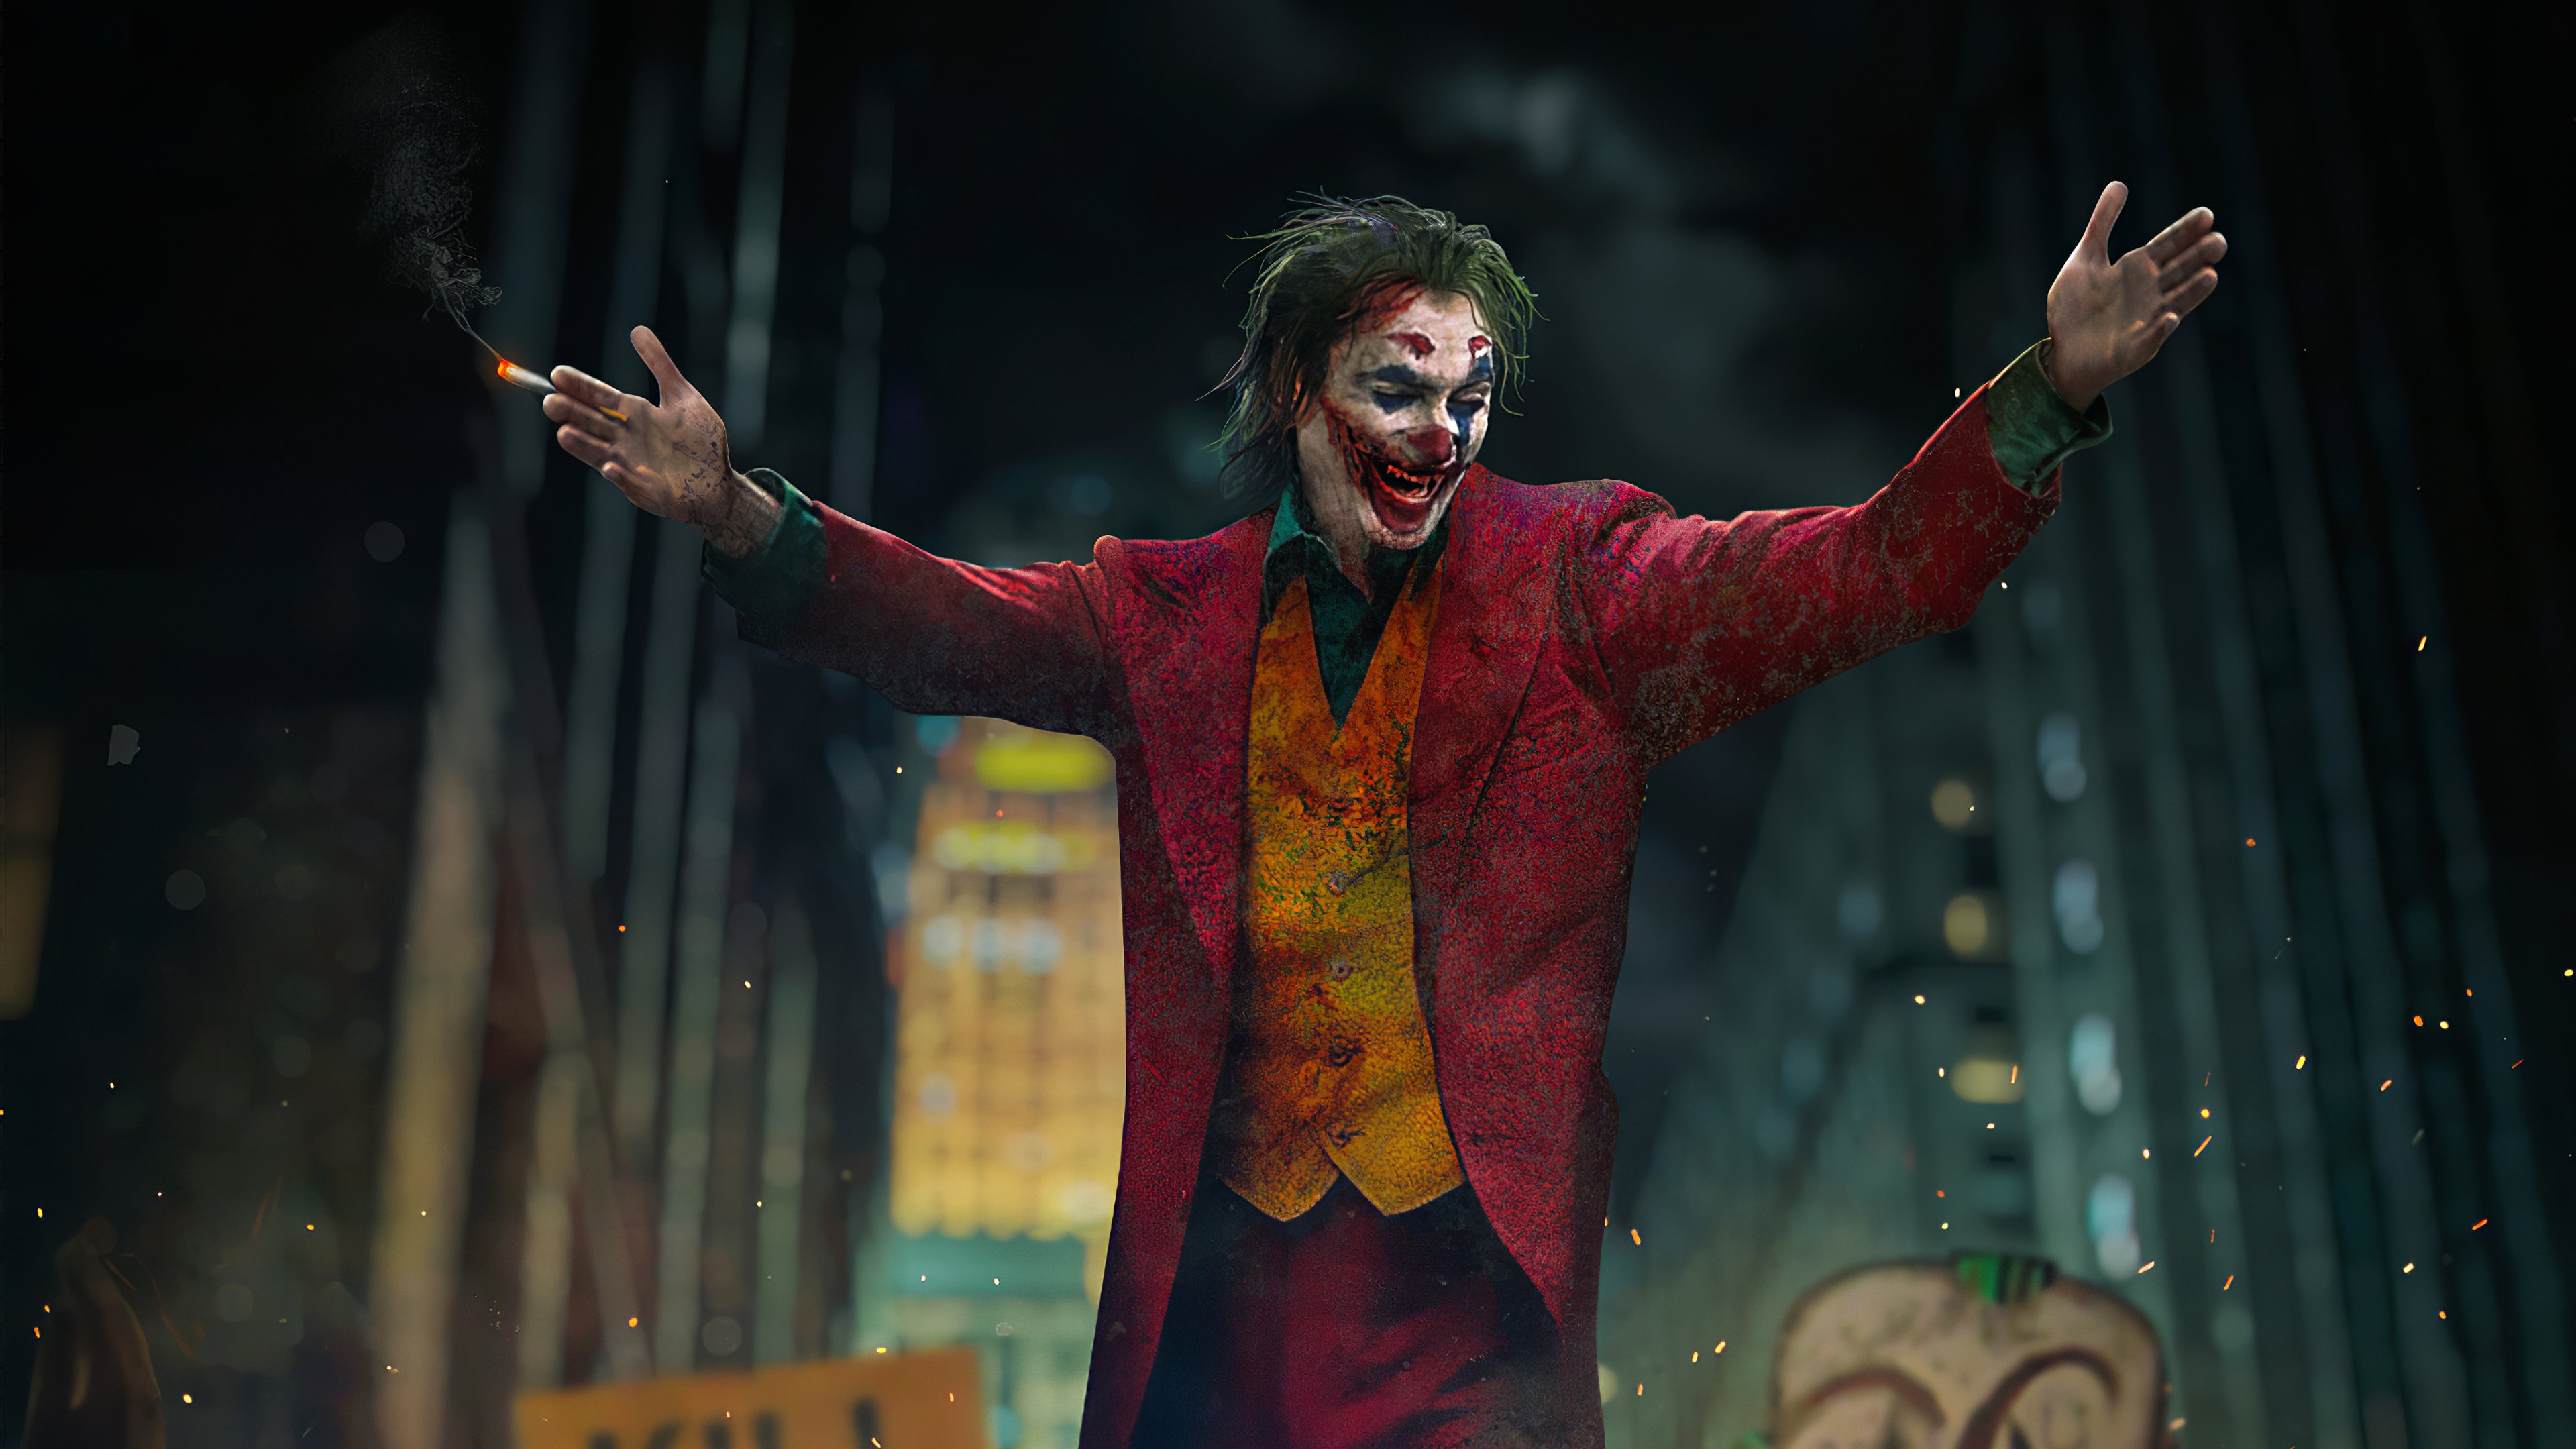 Wallpaper Joker with open arms